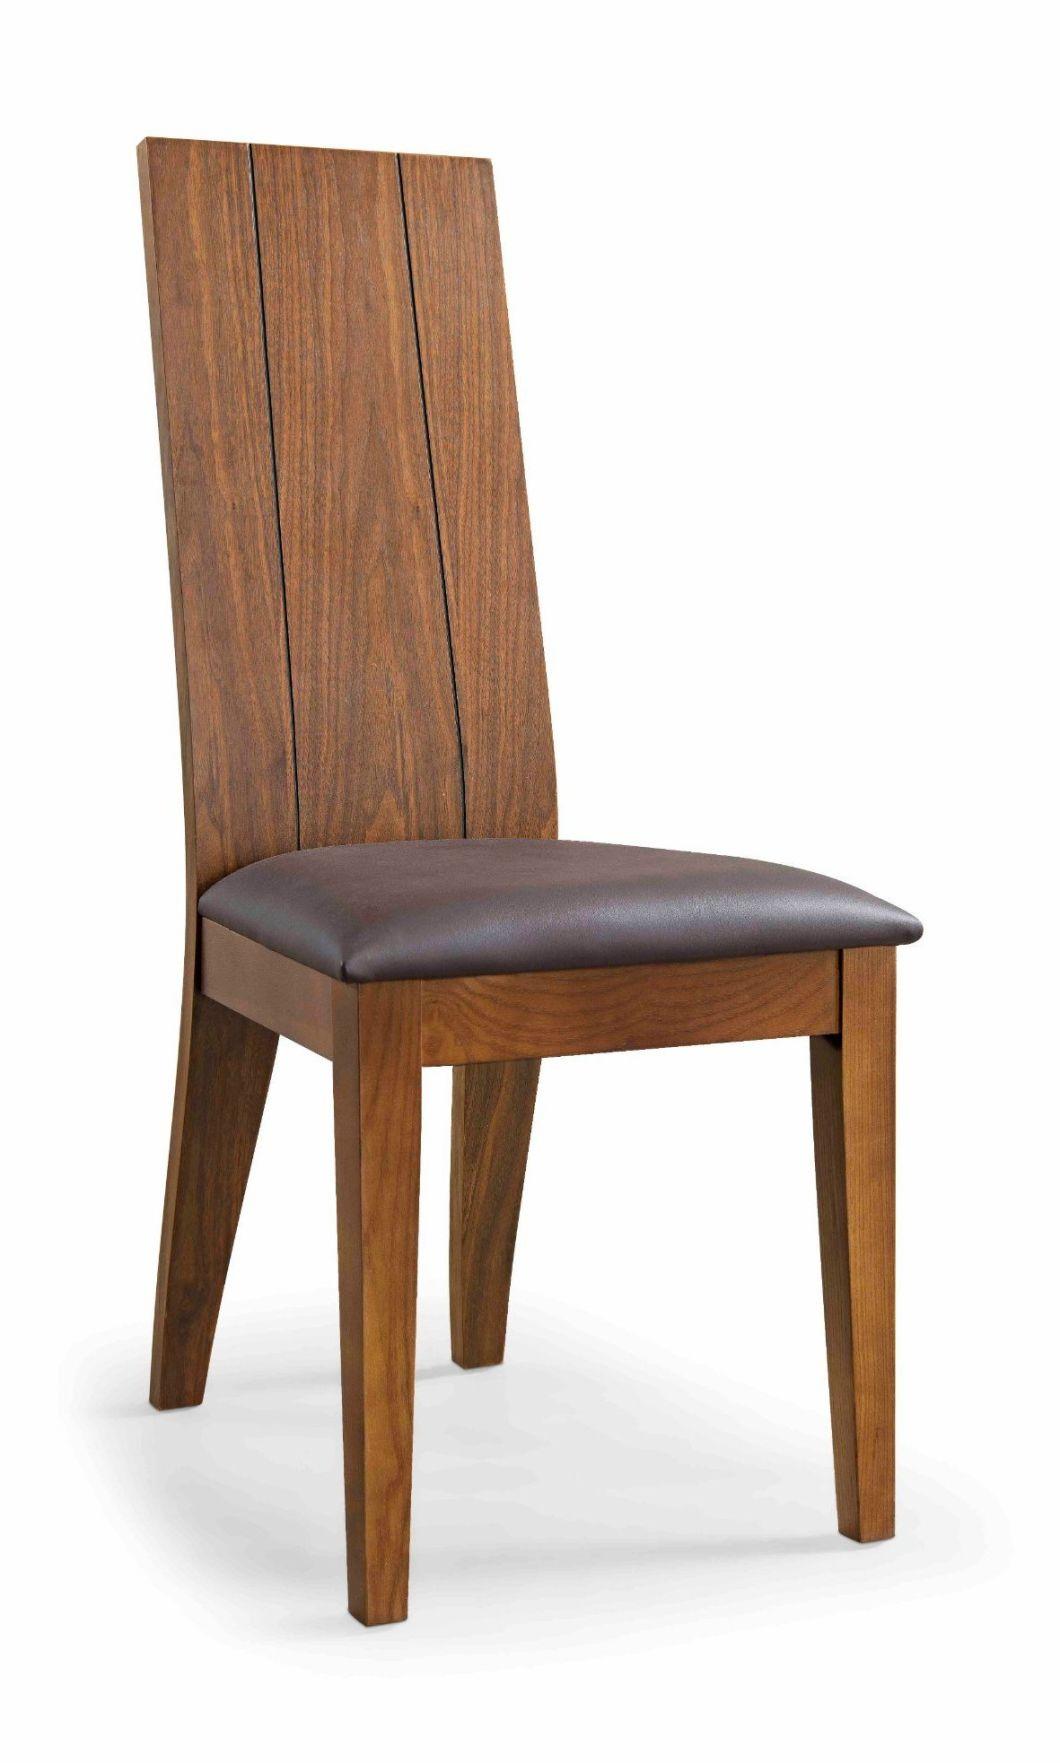 Hot Sale Modern Popular Home Furniture European Design Wood Dining Chair